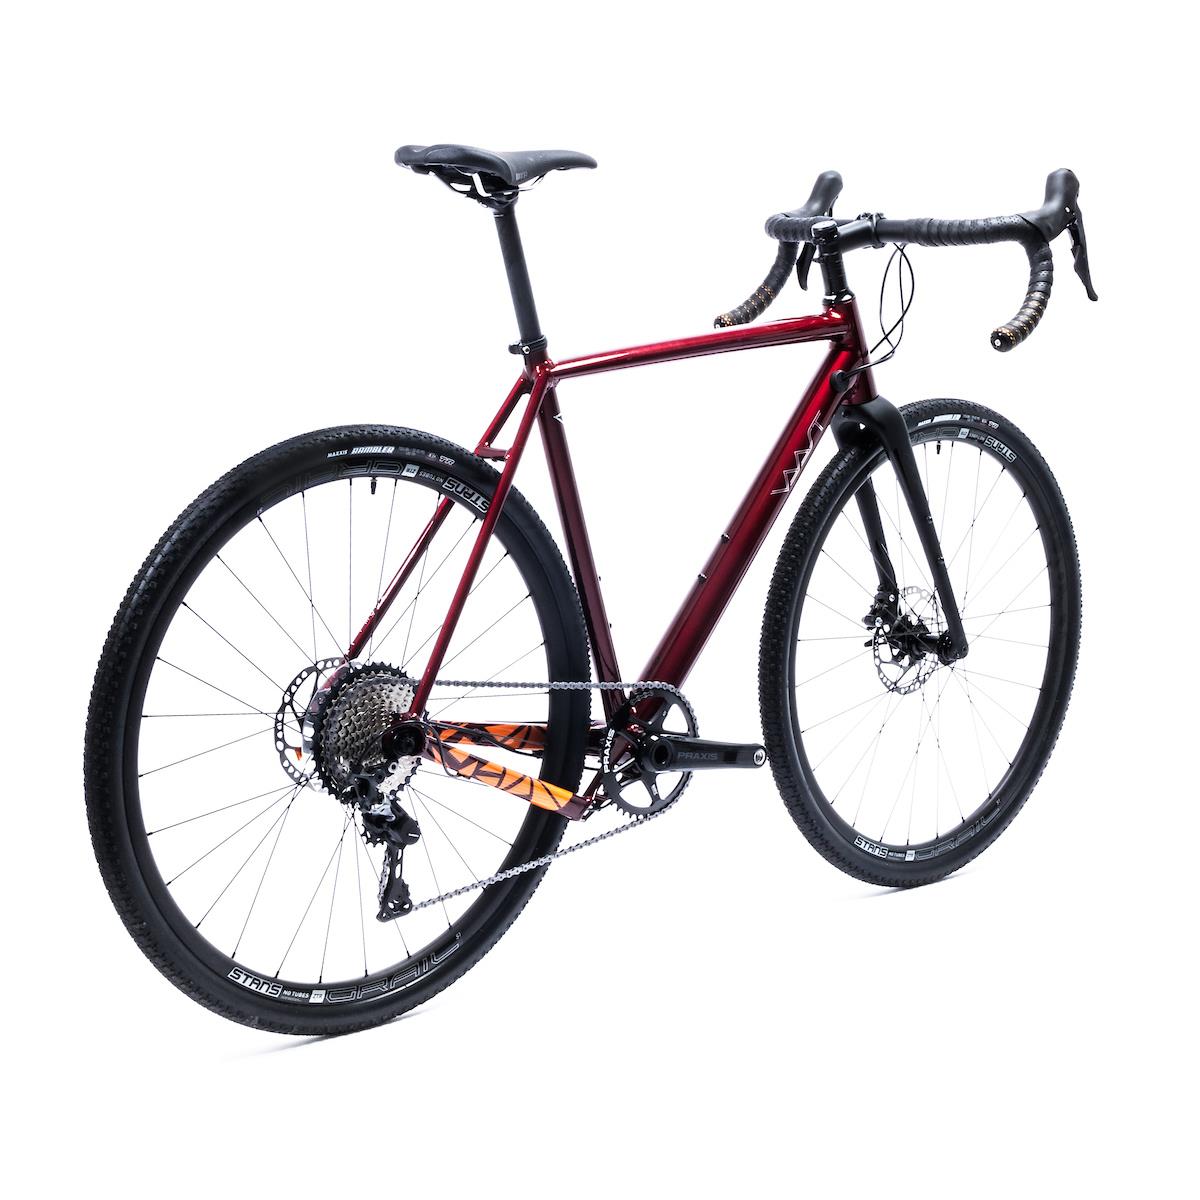 Vaast A/1 700C GRX M Bike, 54 cm, Berry Red